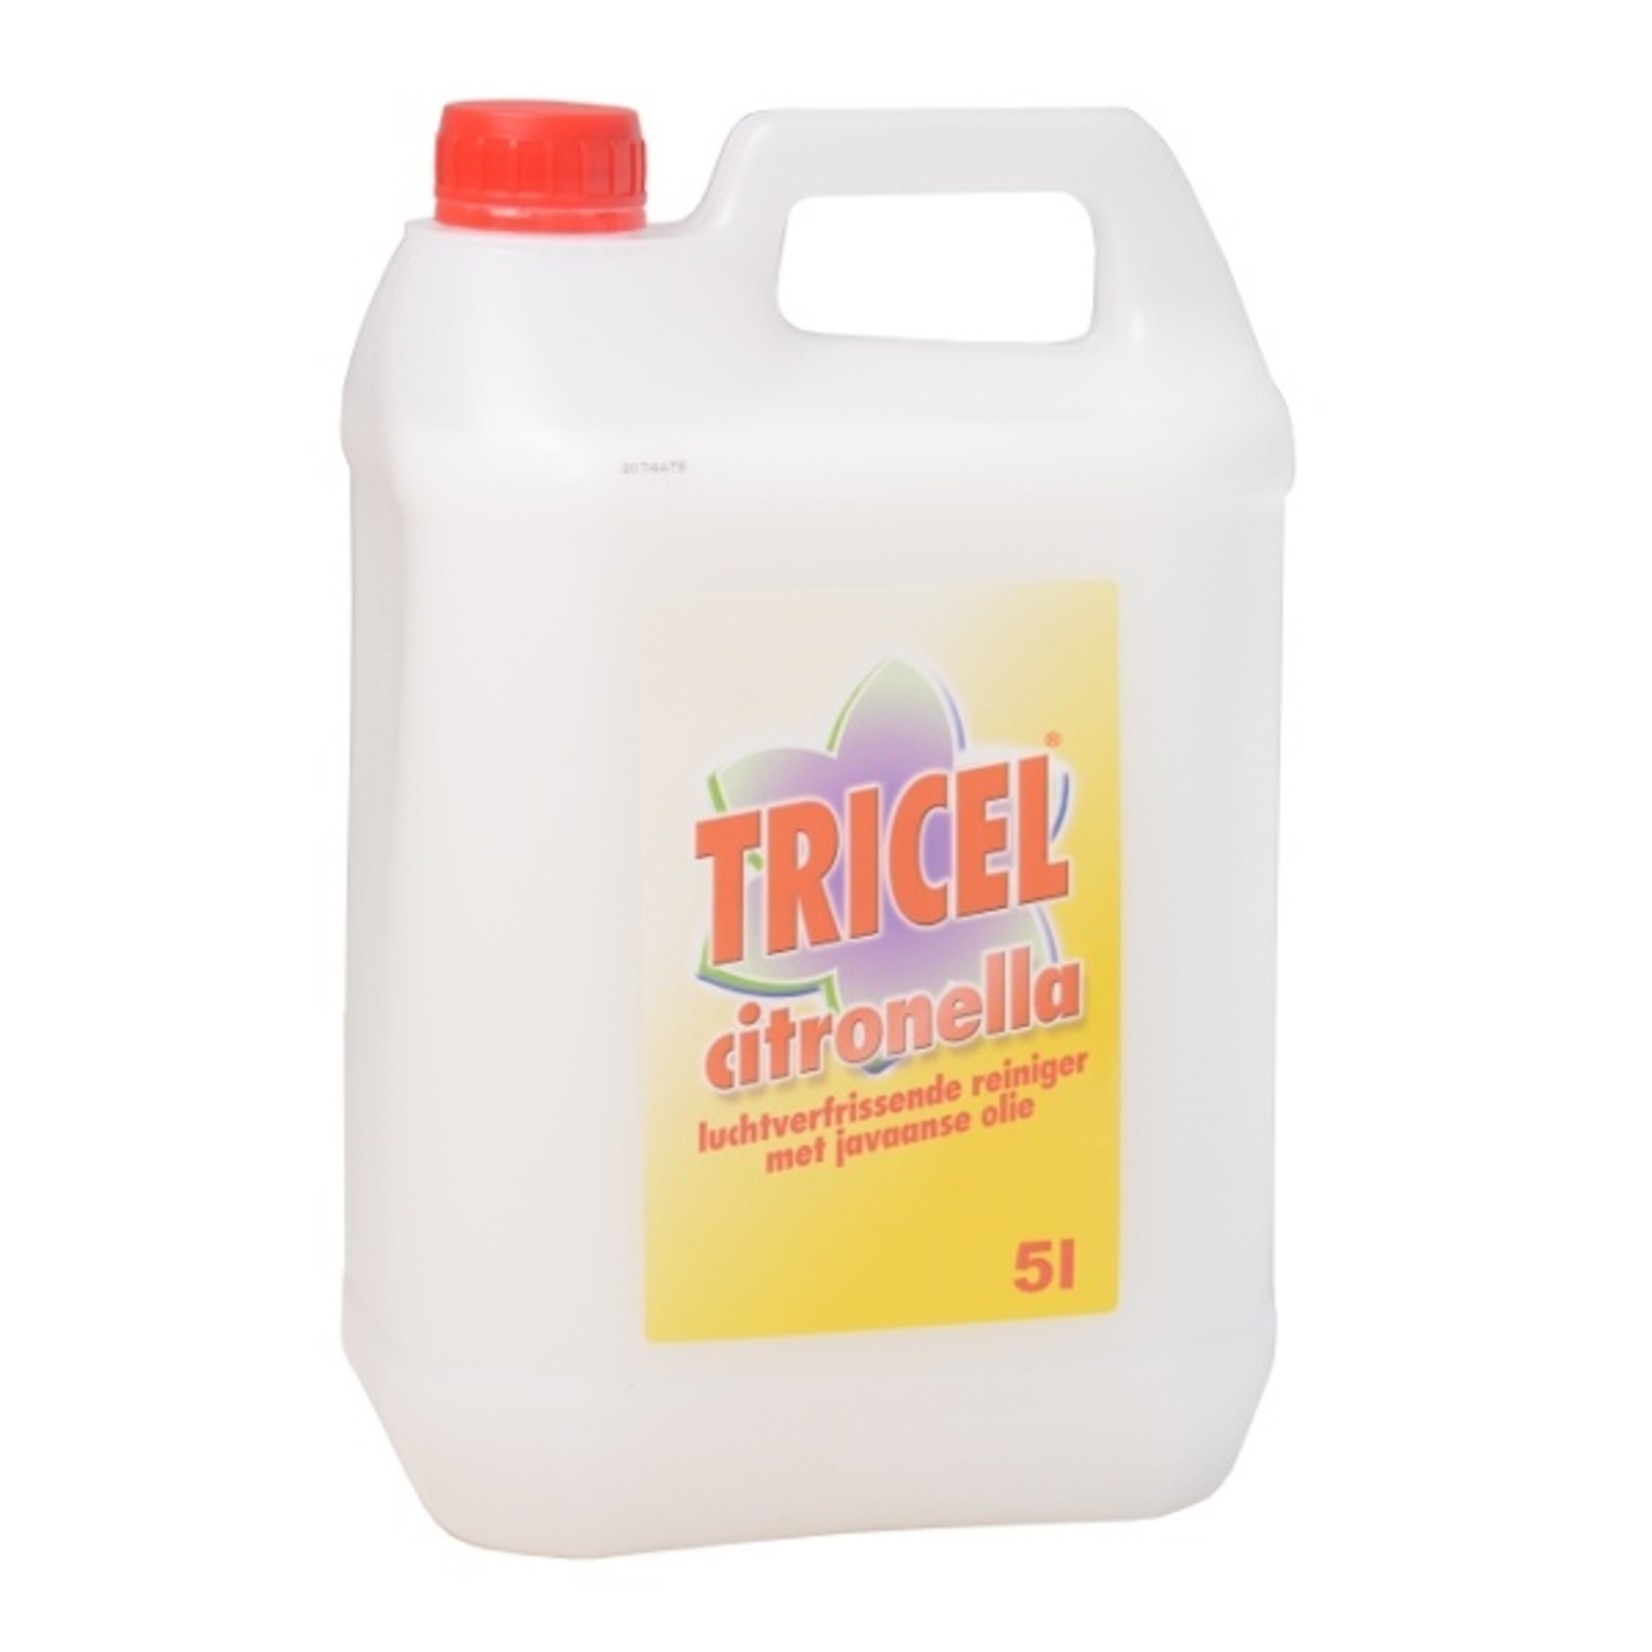 Tricel Tricel Citronella frisreiniger 5L.